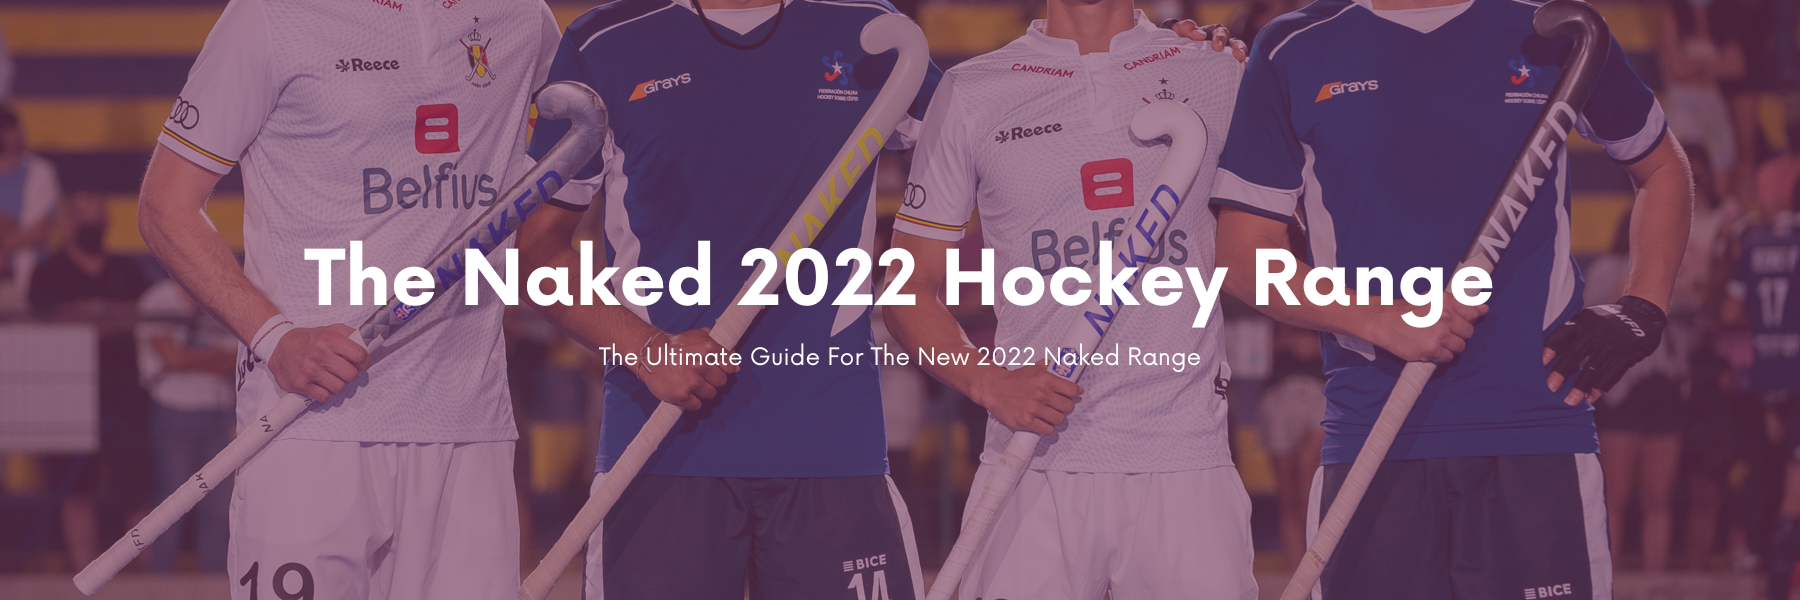 The Naked 2022 Range